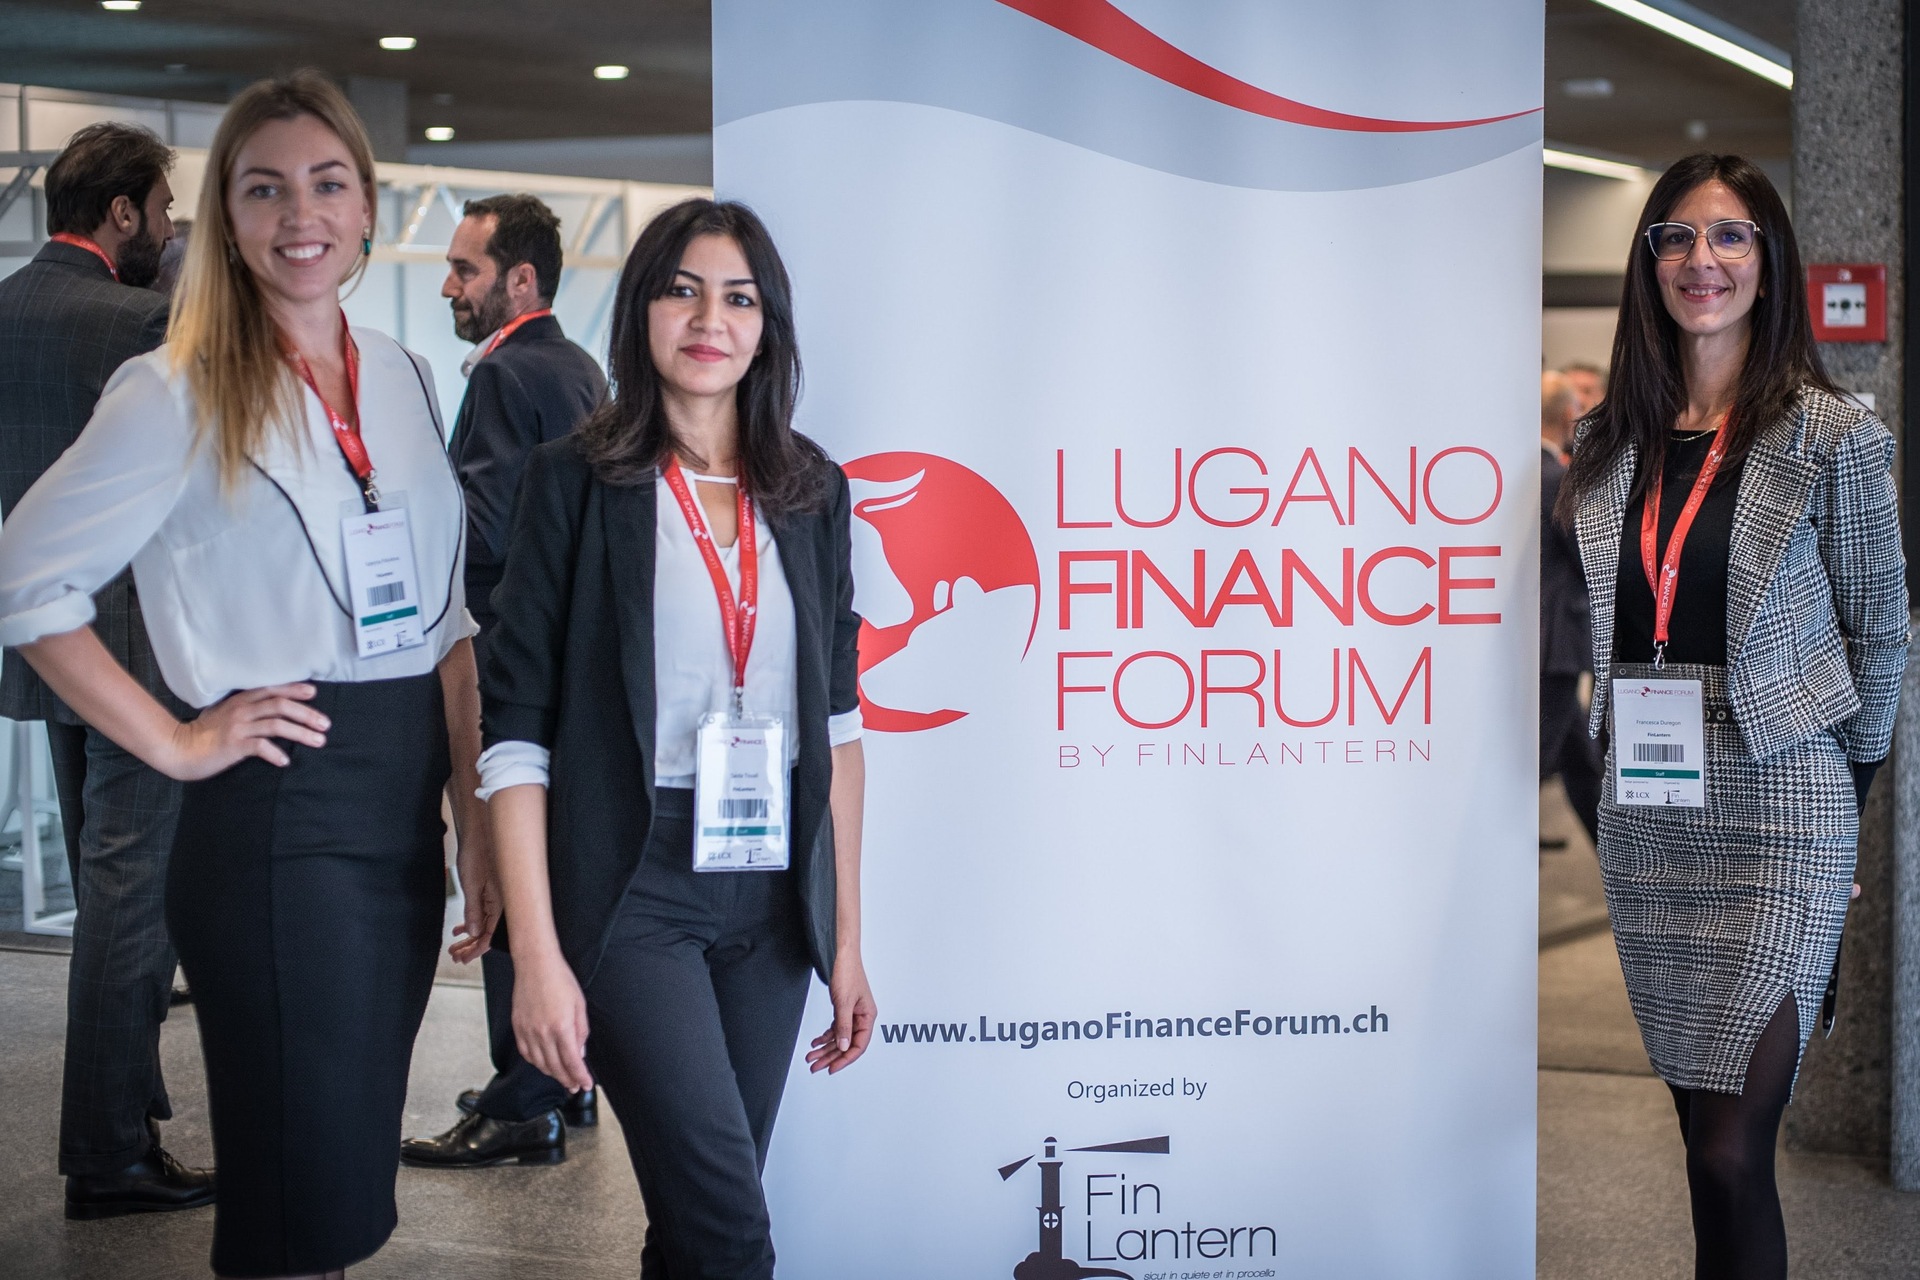 Lugano Finance Forum: ο εκθεσιακός χώρος της έκδοσης 2022 του "Lugano Finance Forum"